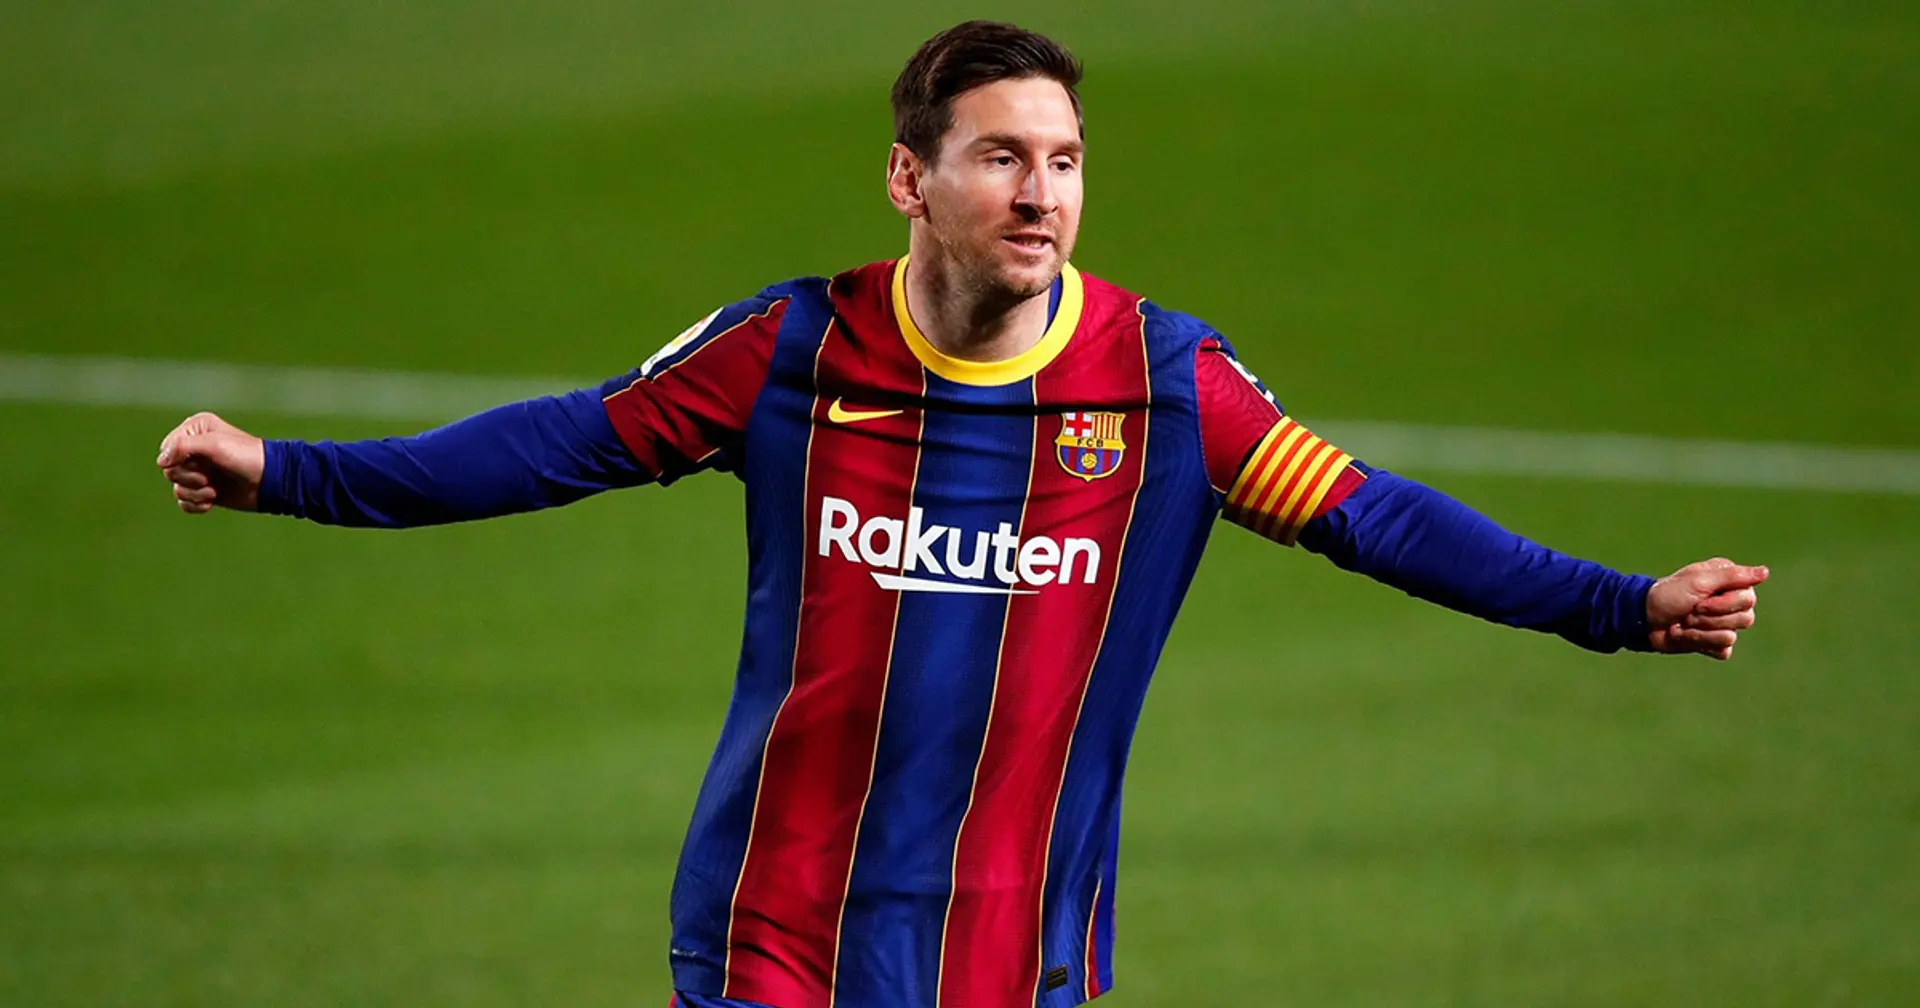 Messi sets historic all-time record after scoring 2 goals vs Getafe